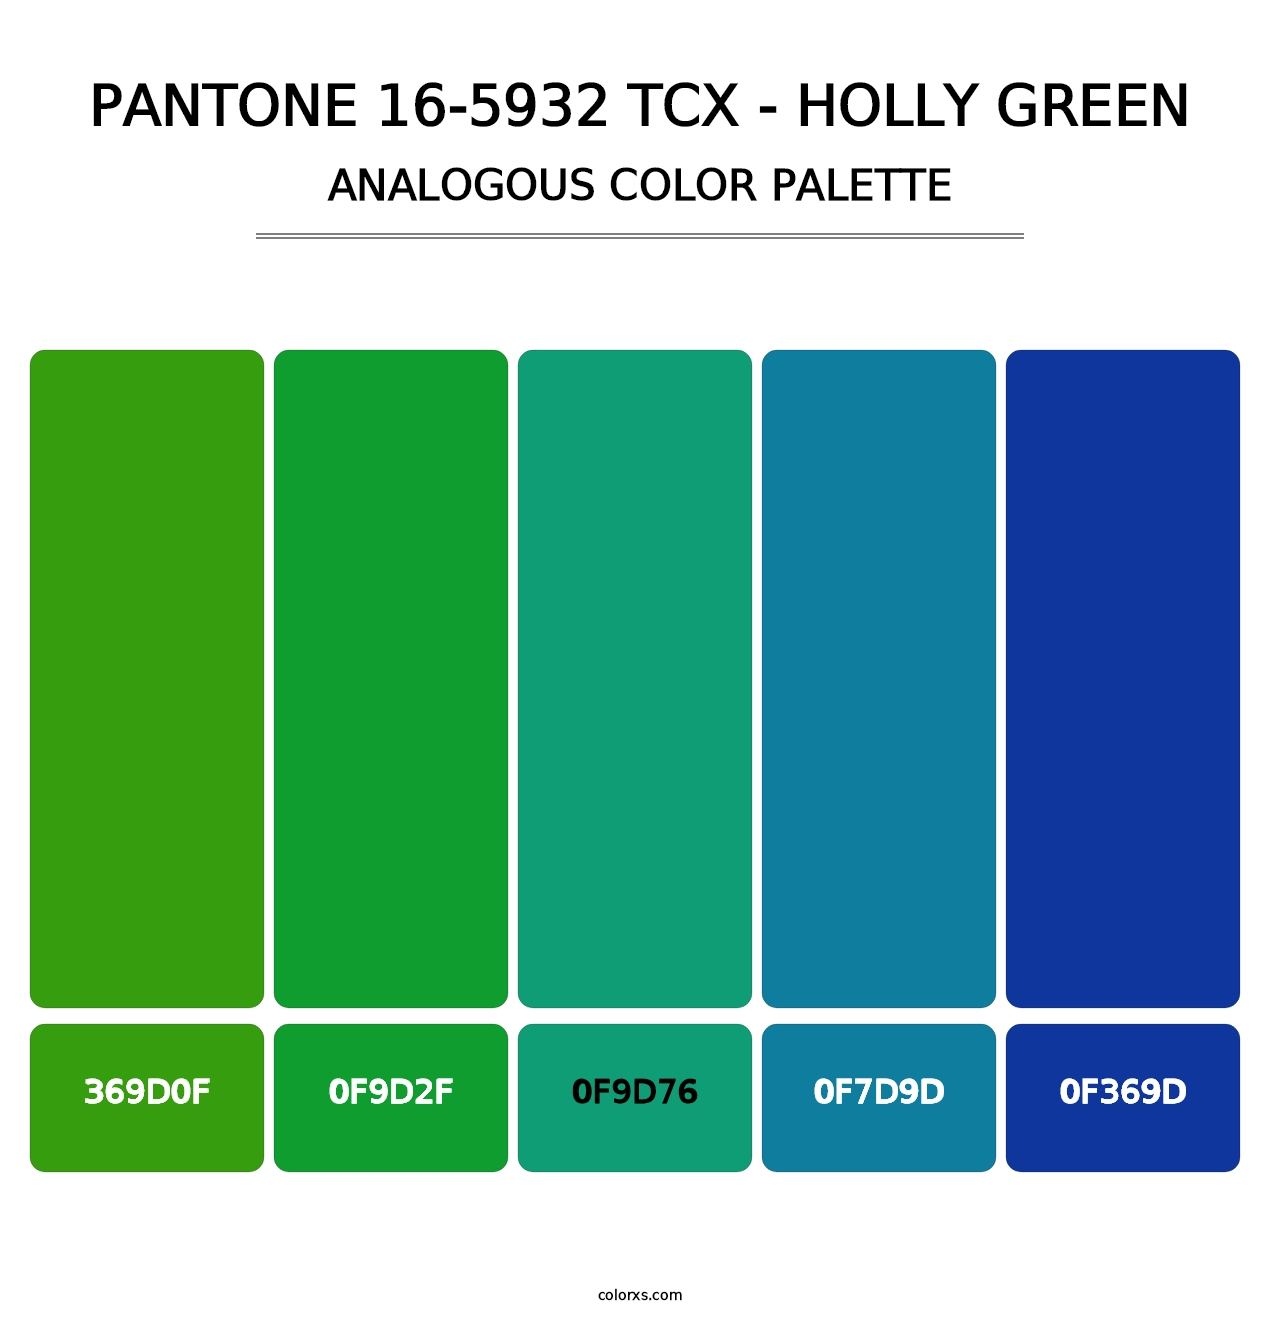 PANTONE 16-5932 TCX - Holly Green - Analogous Color Palette